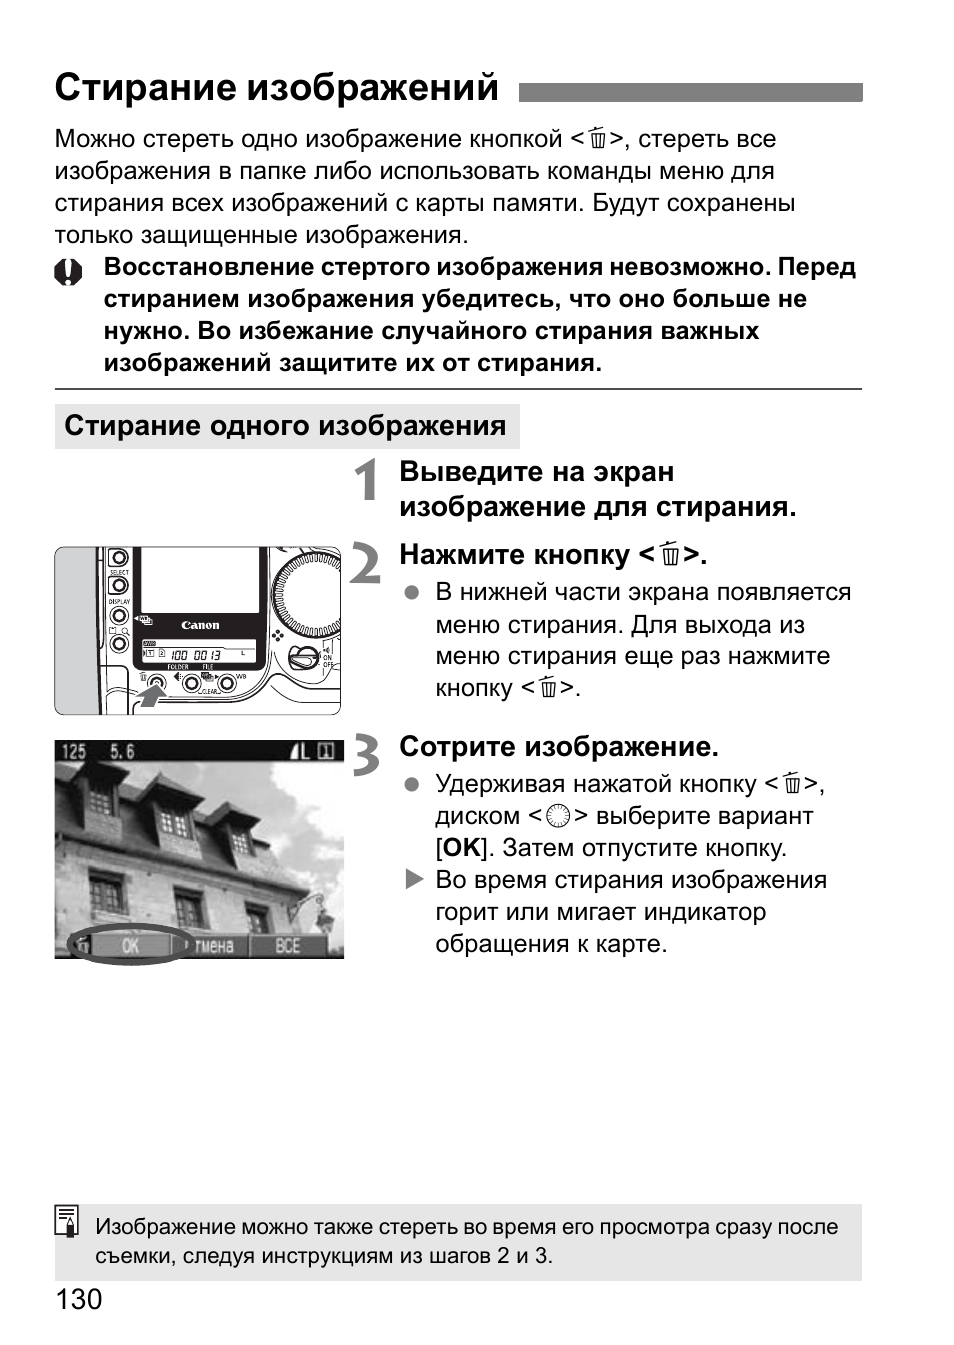 Стирание изображений | Инструкция по эксплуатации Canon EOS 1D Mark II N | Страница 130 / 196